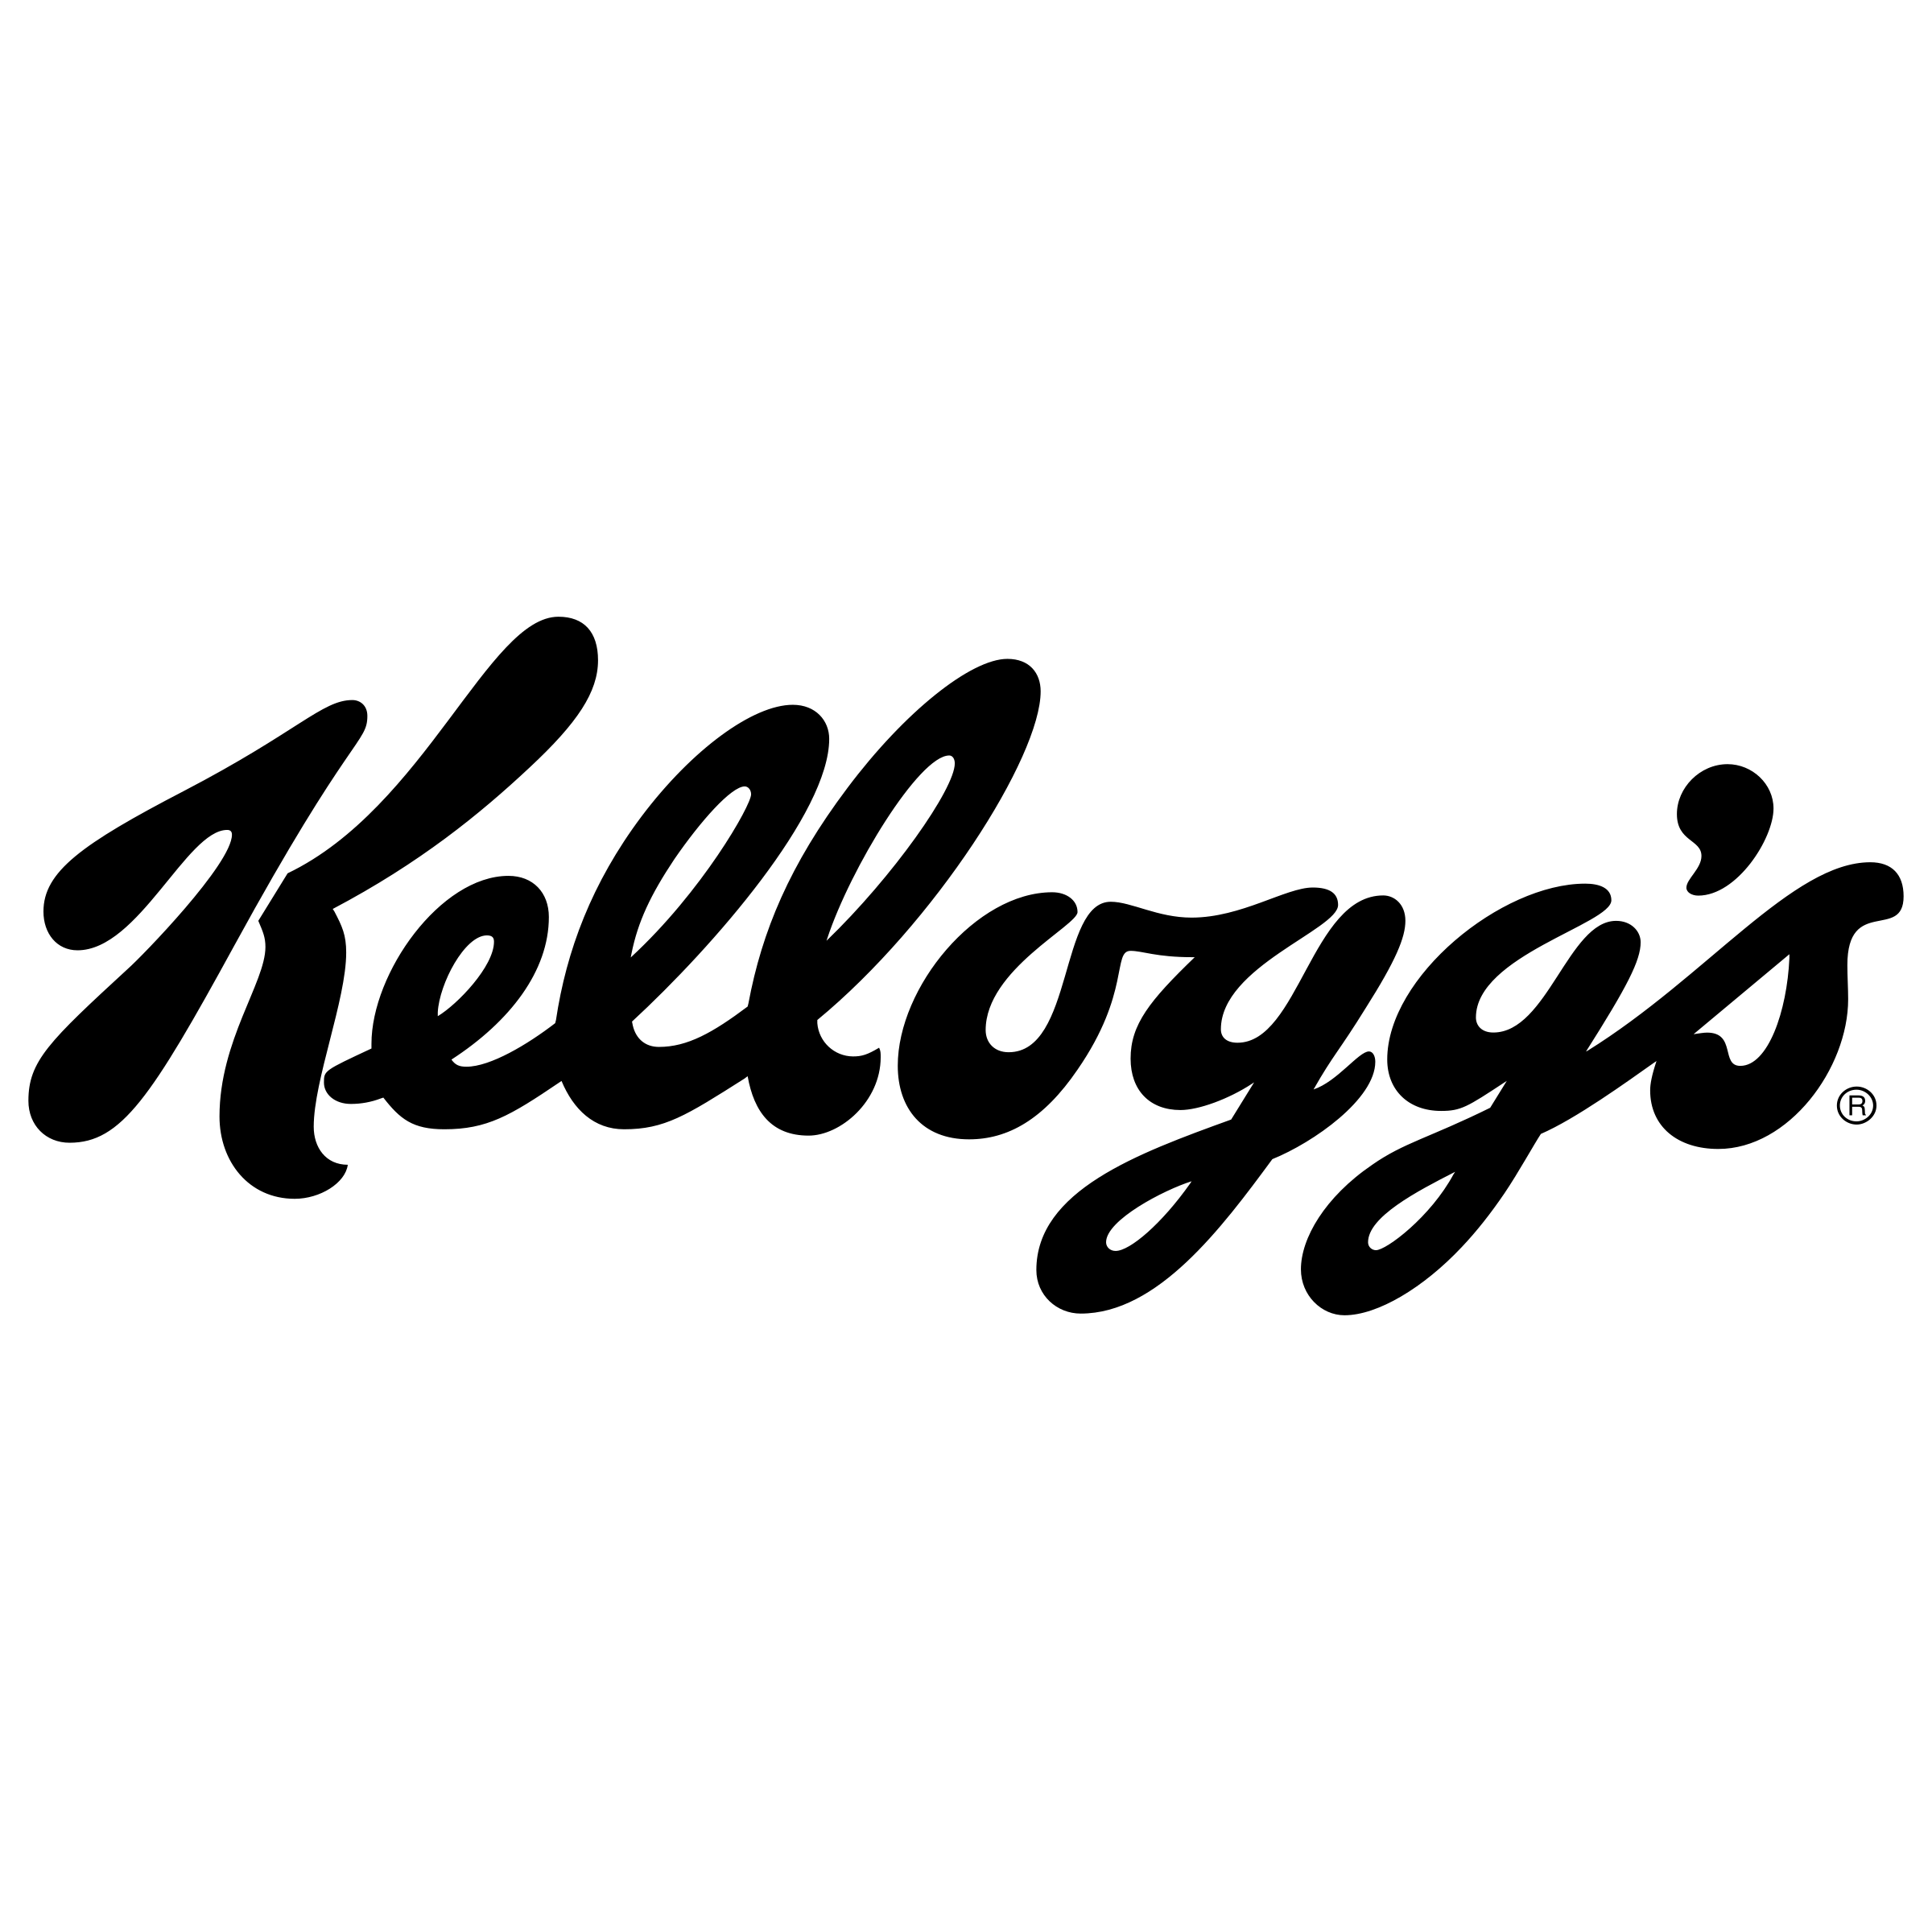 Kelogs Logo - Kellogg's Logo PNG Transparent & SVG Vector - Freebie Supply